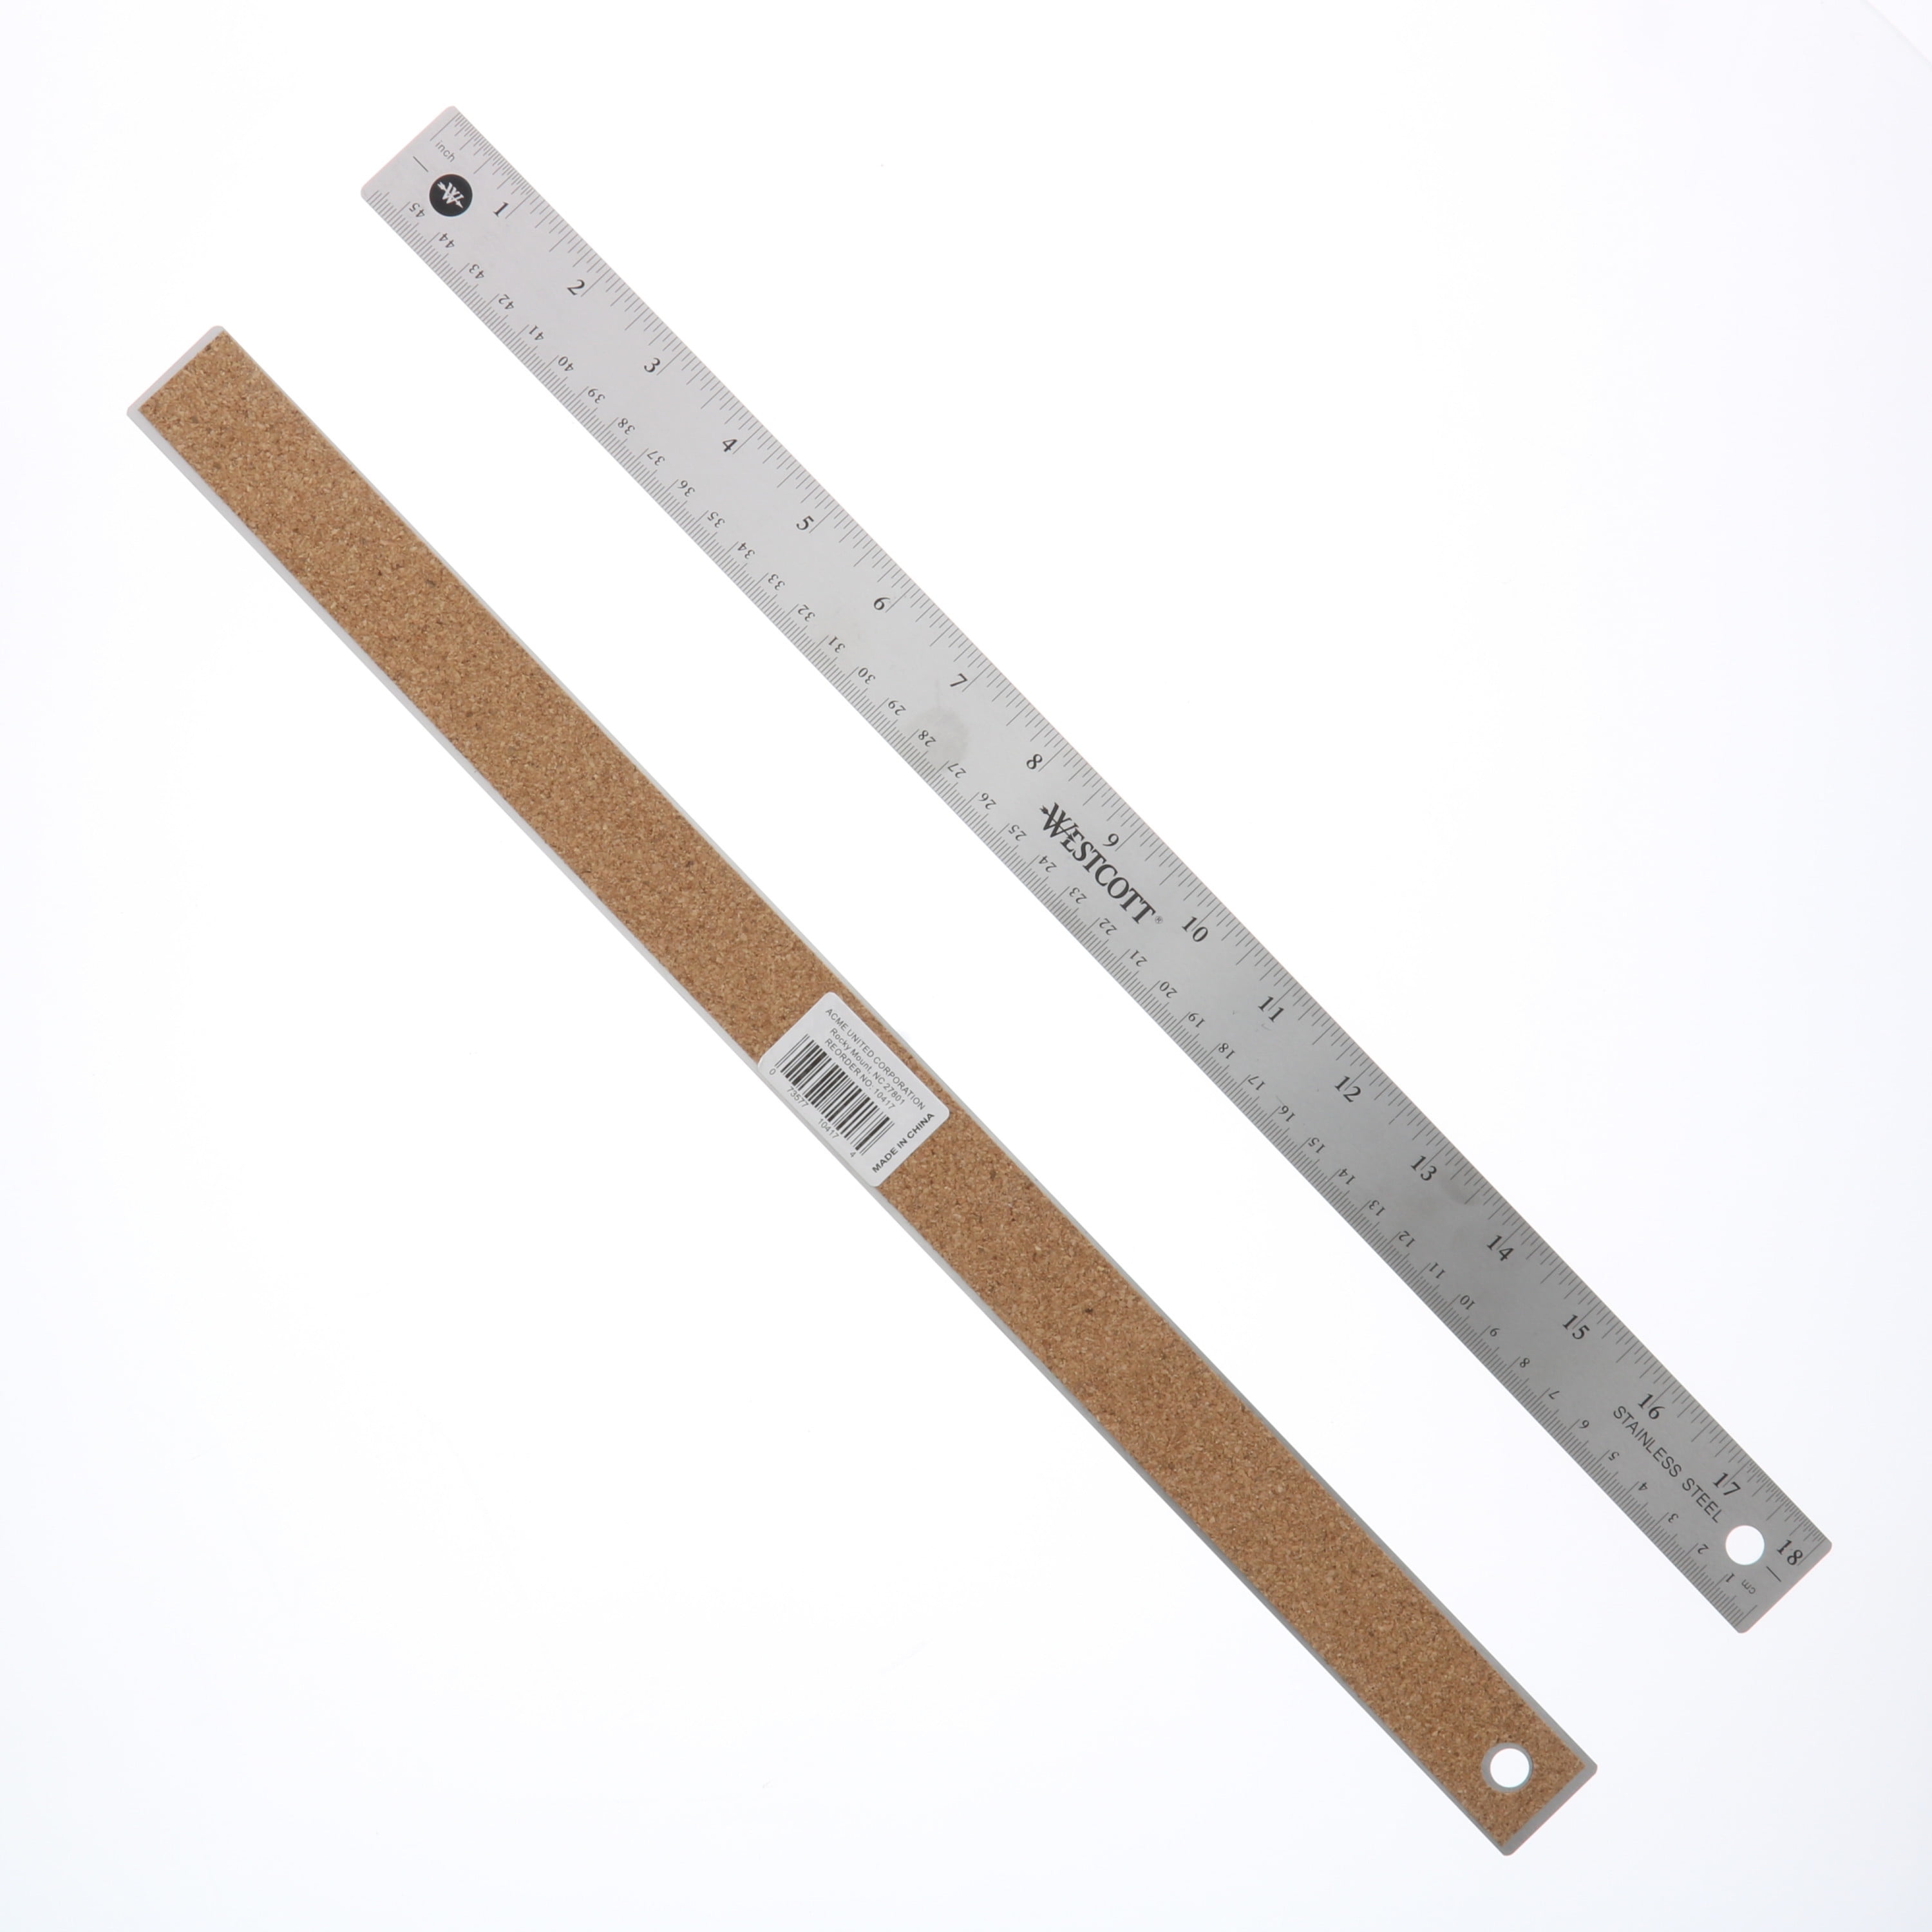 shopaztecs - Stainless Steel Corkback Ruler Inch/Metric 18 Inch